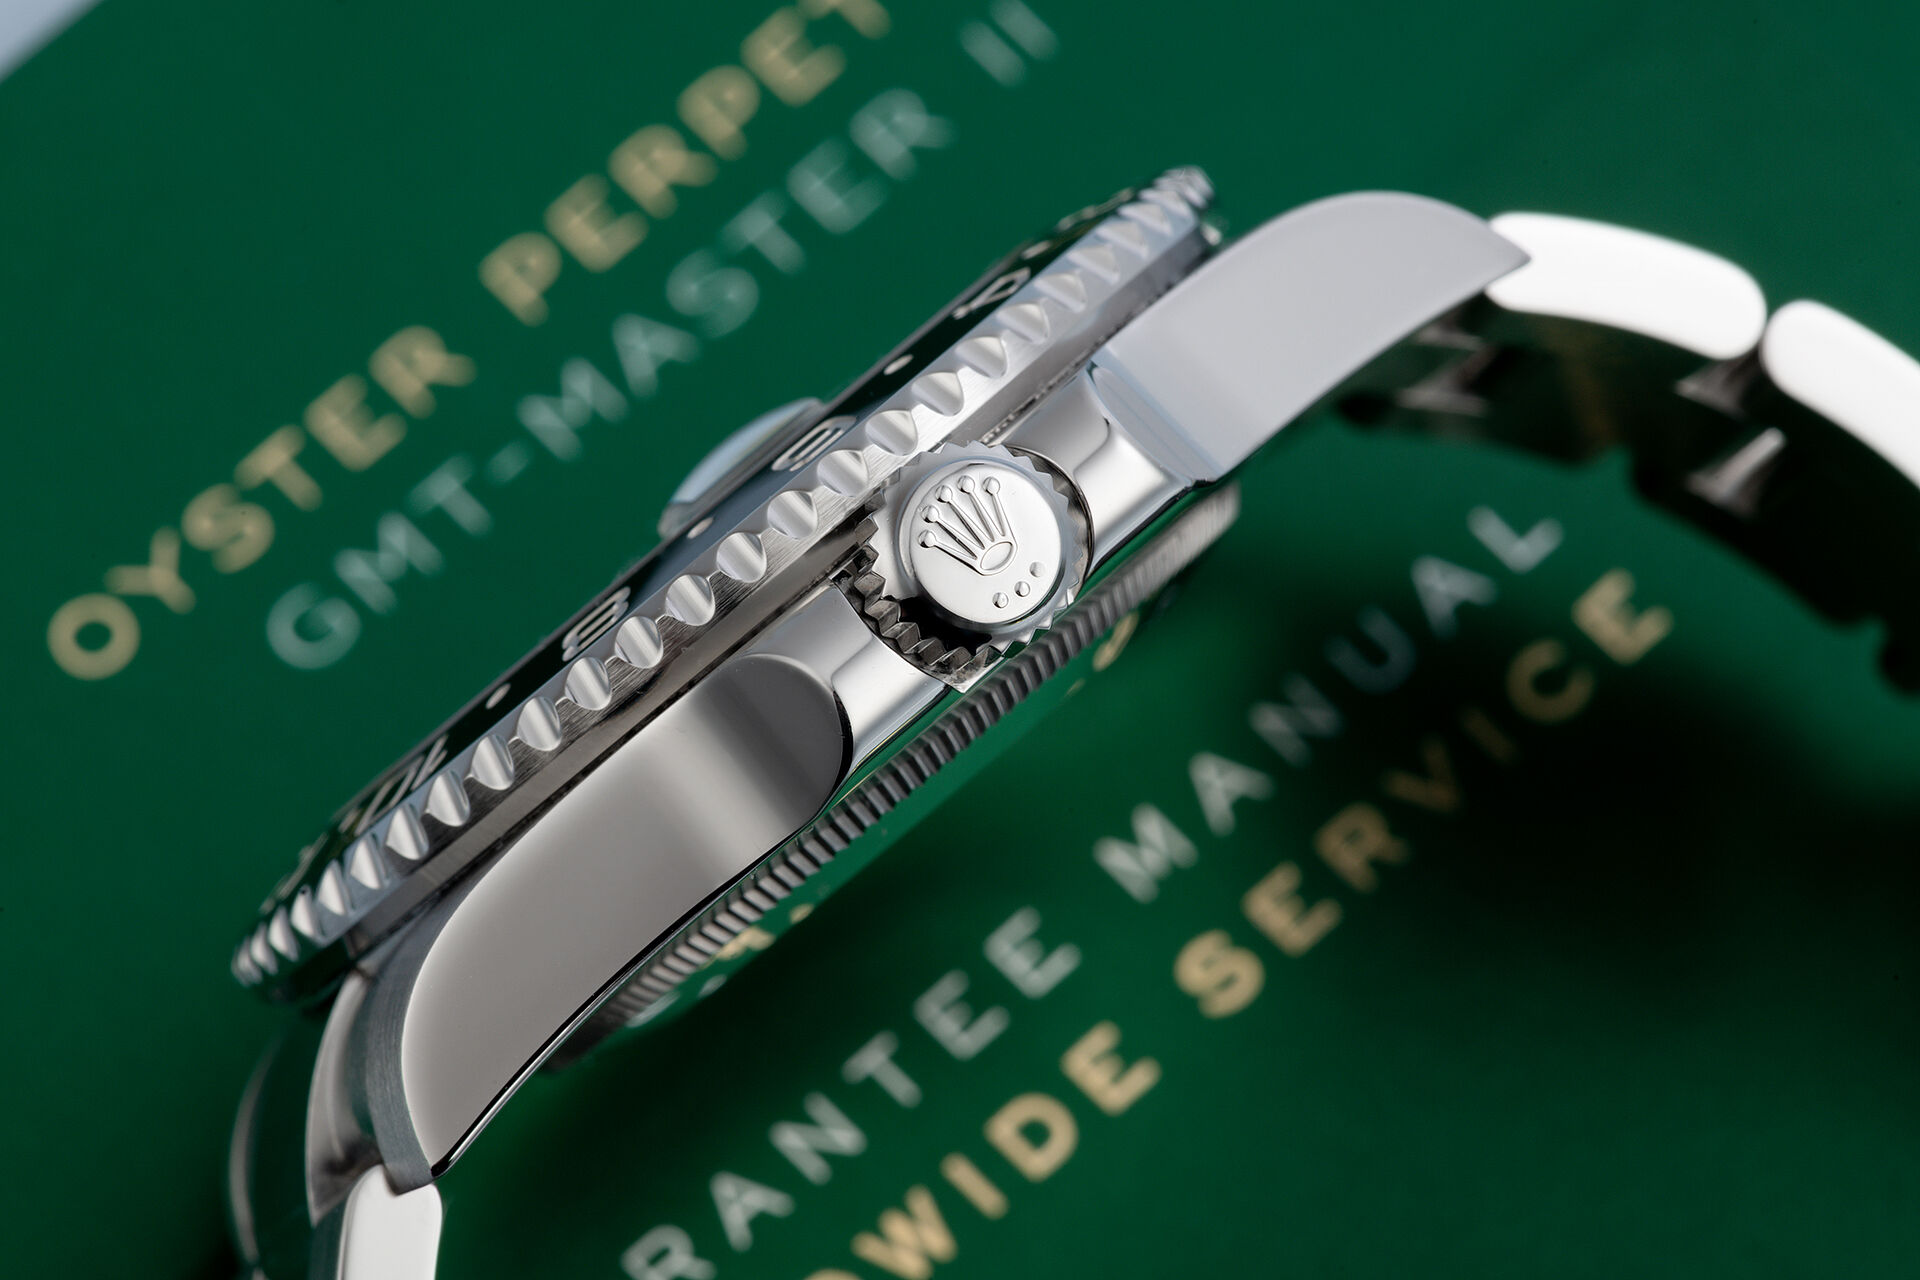 ref 116710LN | '5 Year Warranty' | Rolex GMT-Master II